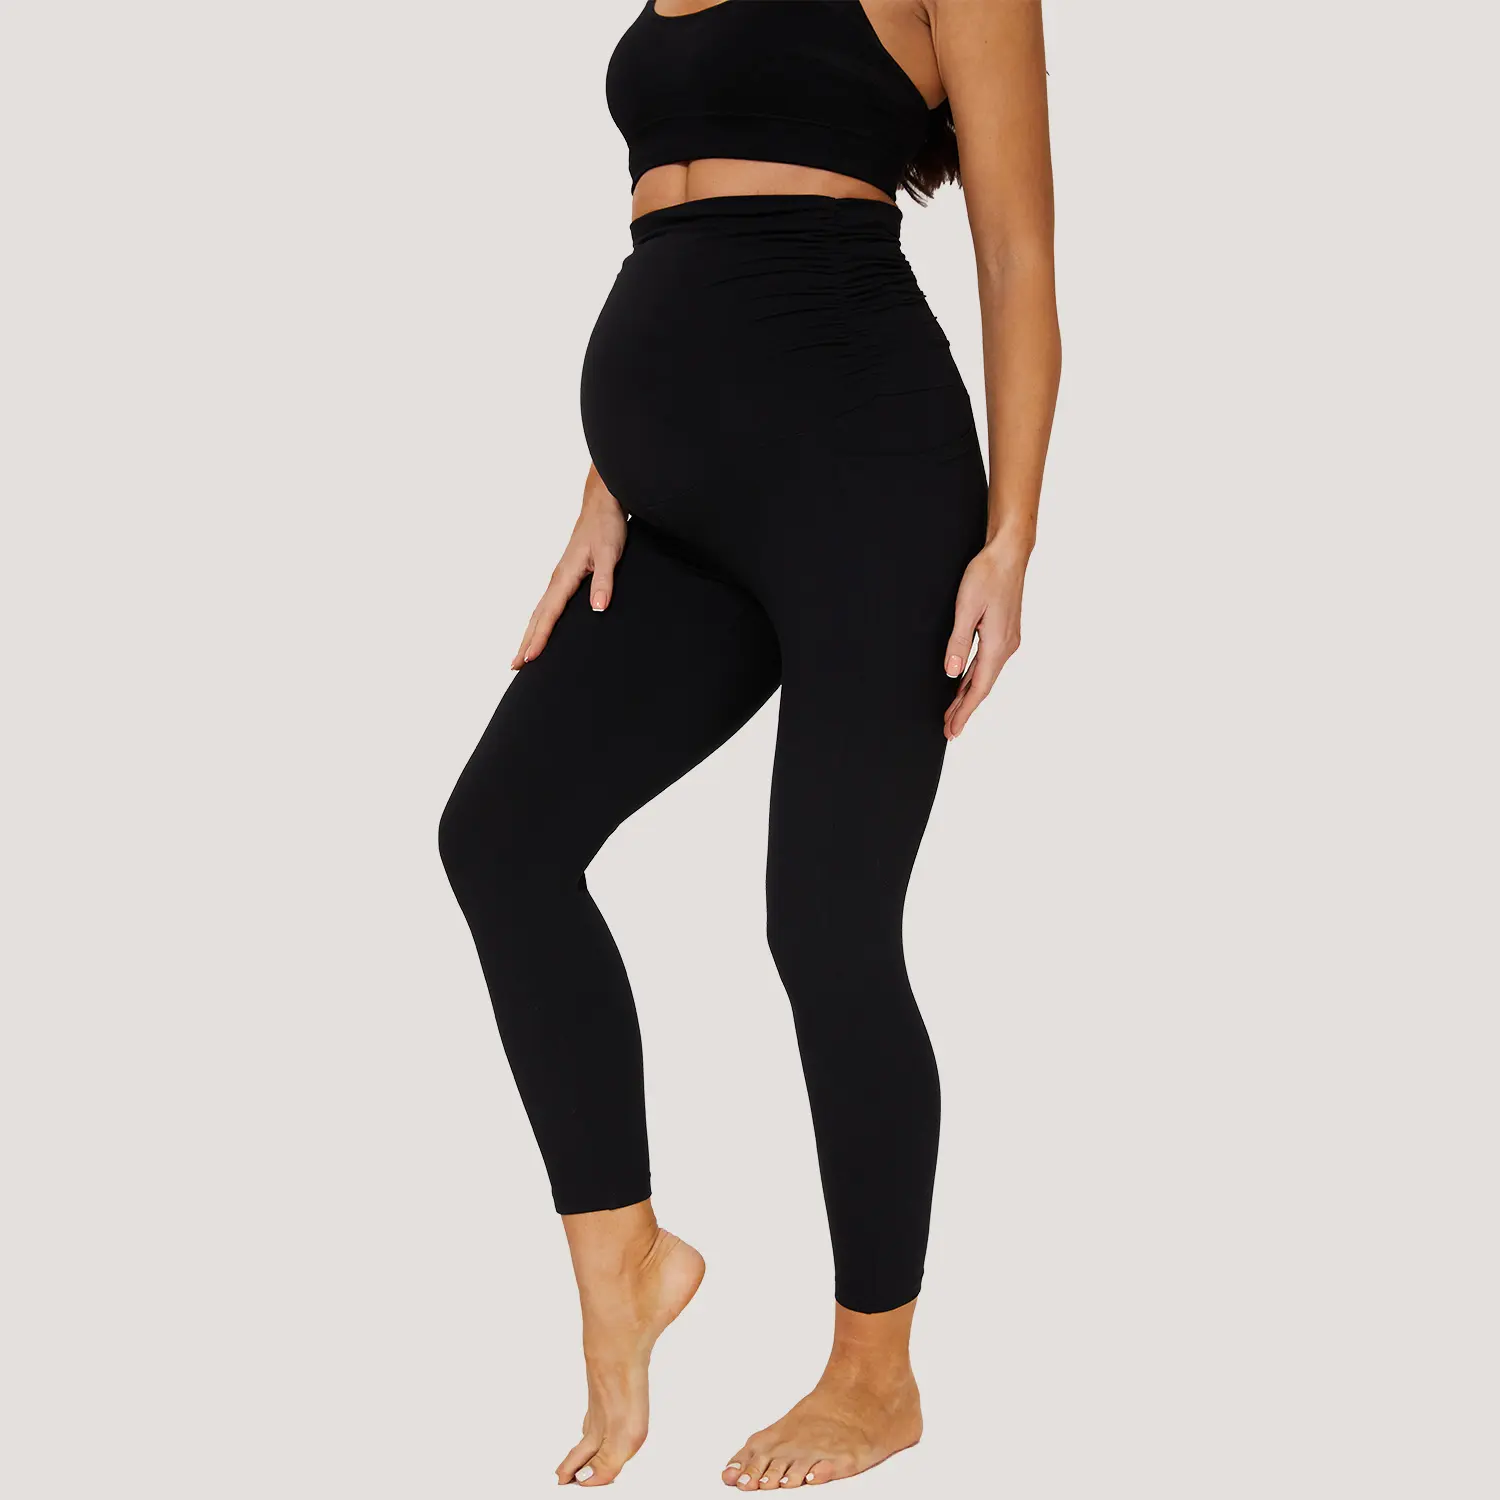 maternity leggings for Pregnant clothes Women's Stretch Casual Custom High Waist Pregnancy soft yoga Leggings maternity pants